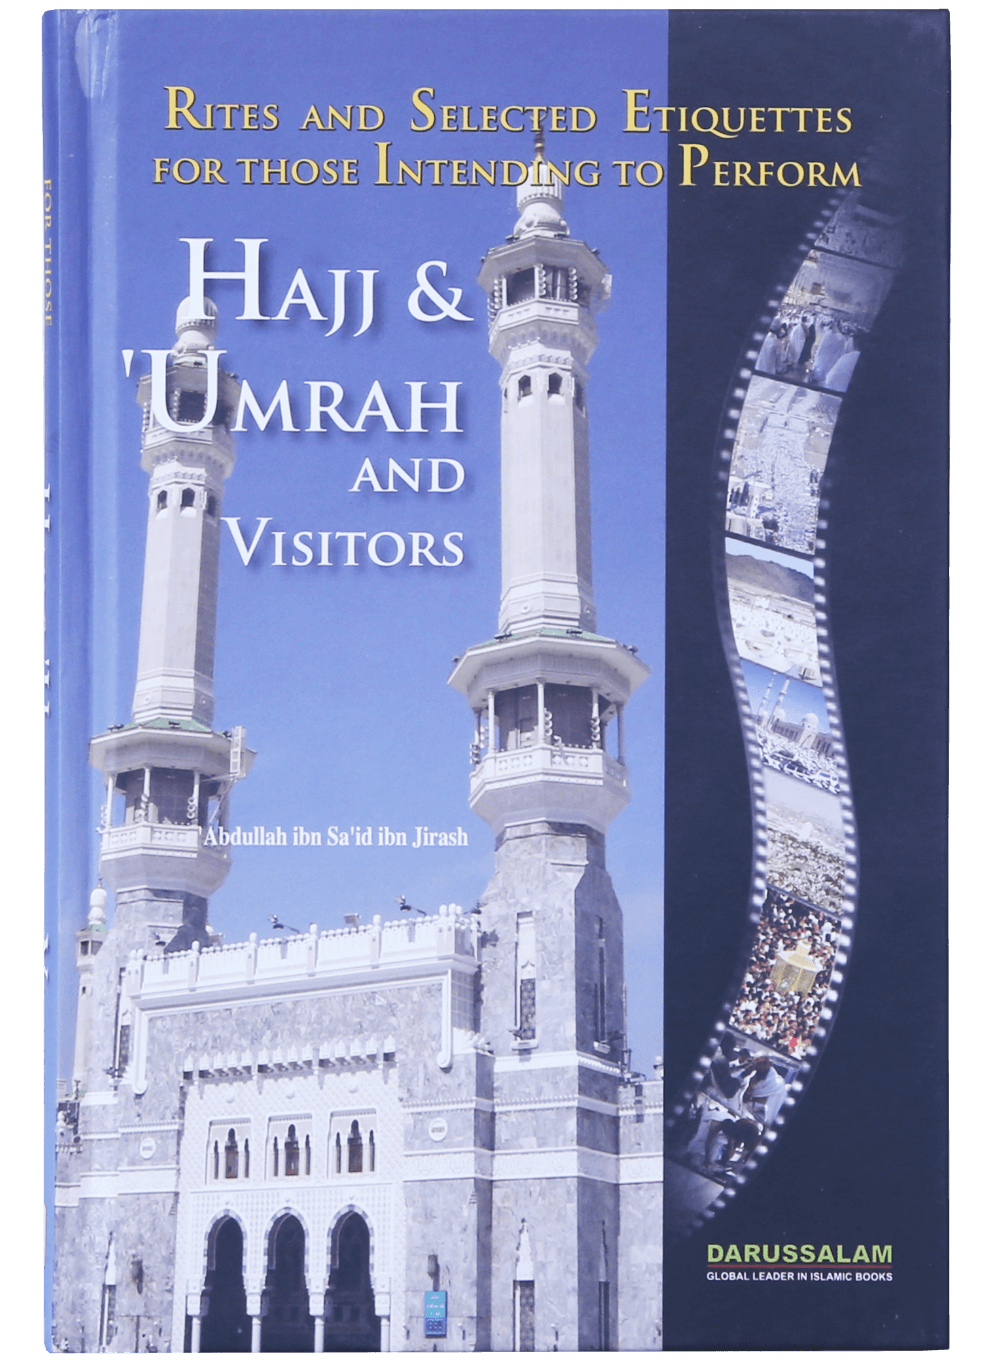 darussalam-2017-10-02-10-08-27hajj-and-umrah-and-visitors-(1)